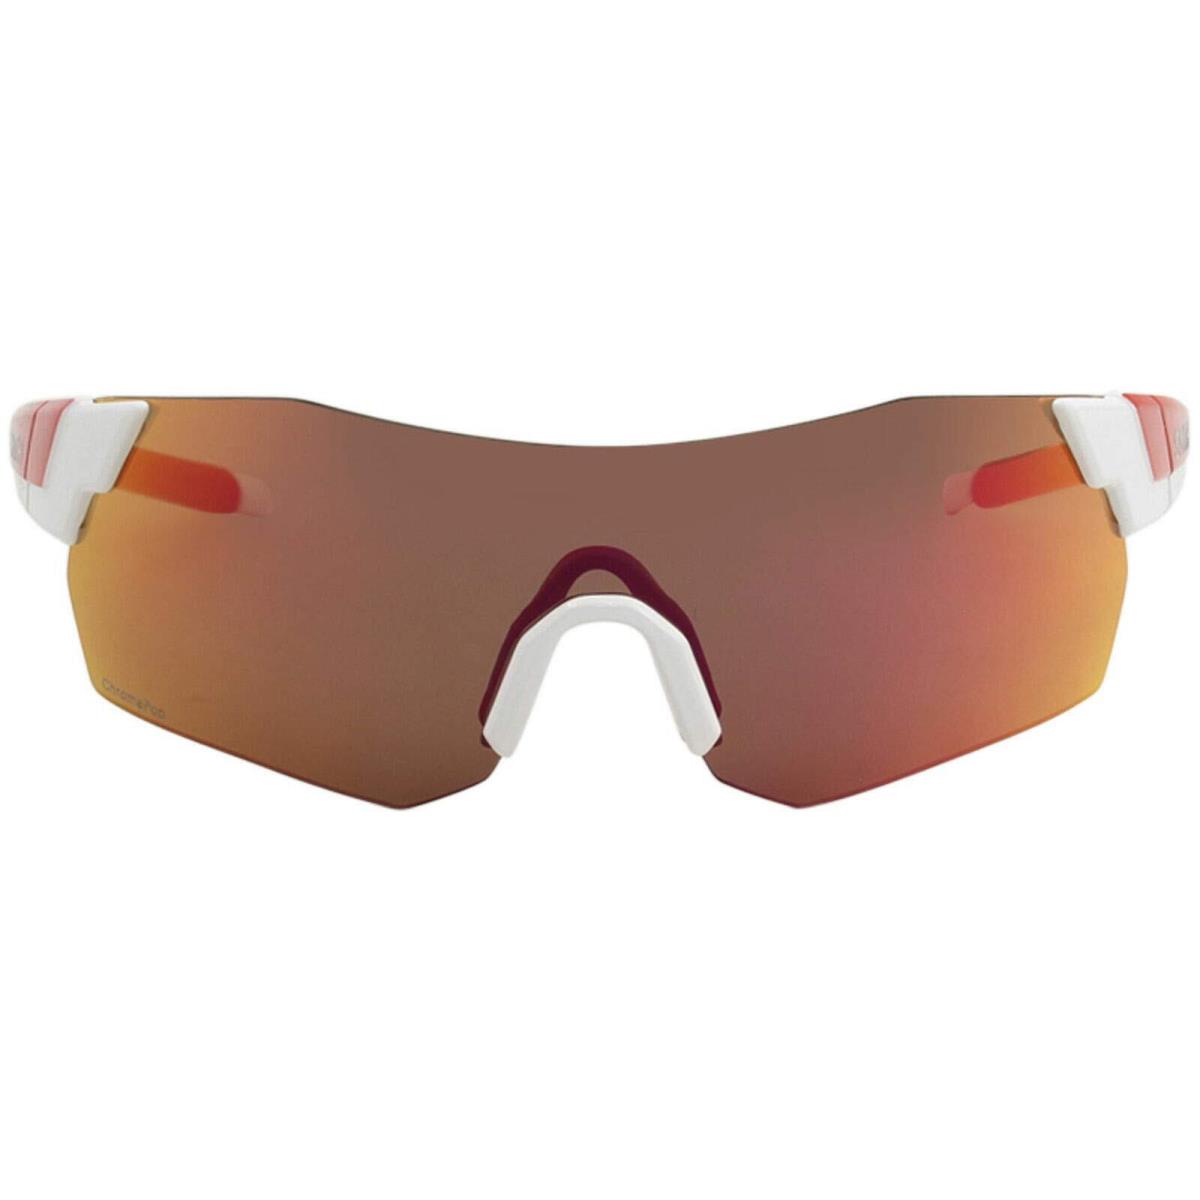 PLPKX63VK6-ARENAMAX Mens Smith Optics Pivlock Arena Max Sunglasses